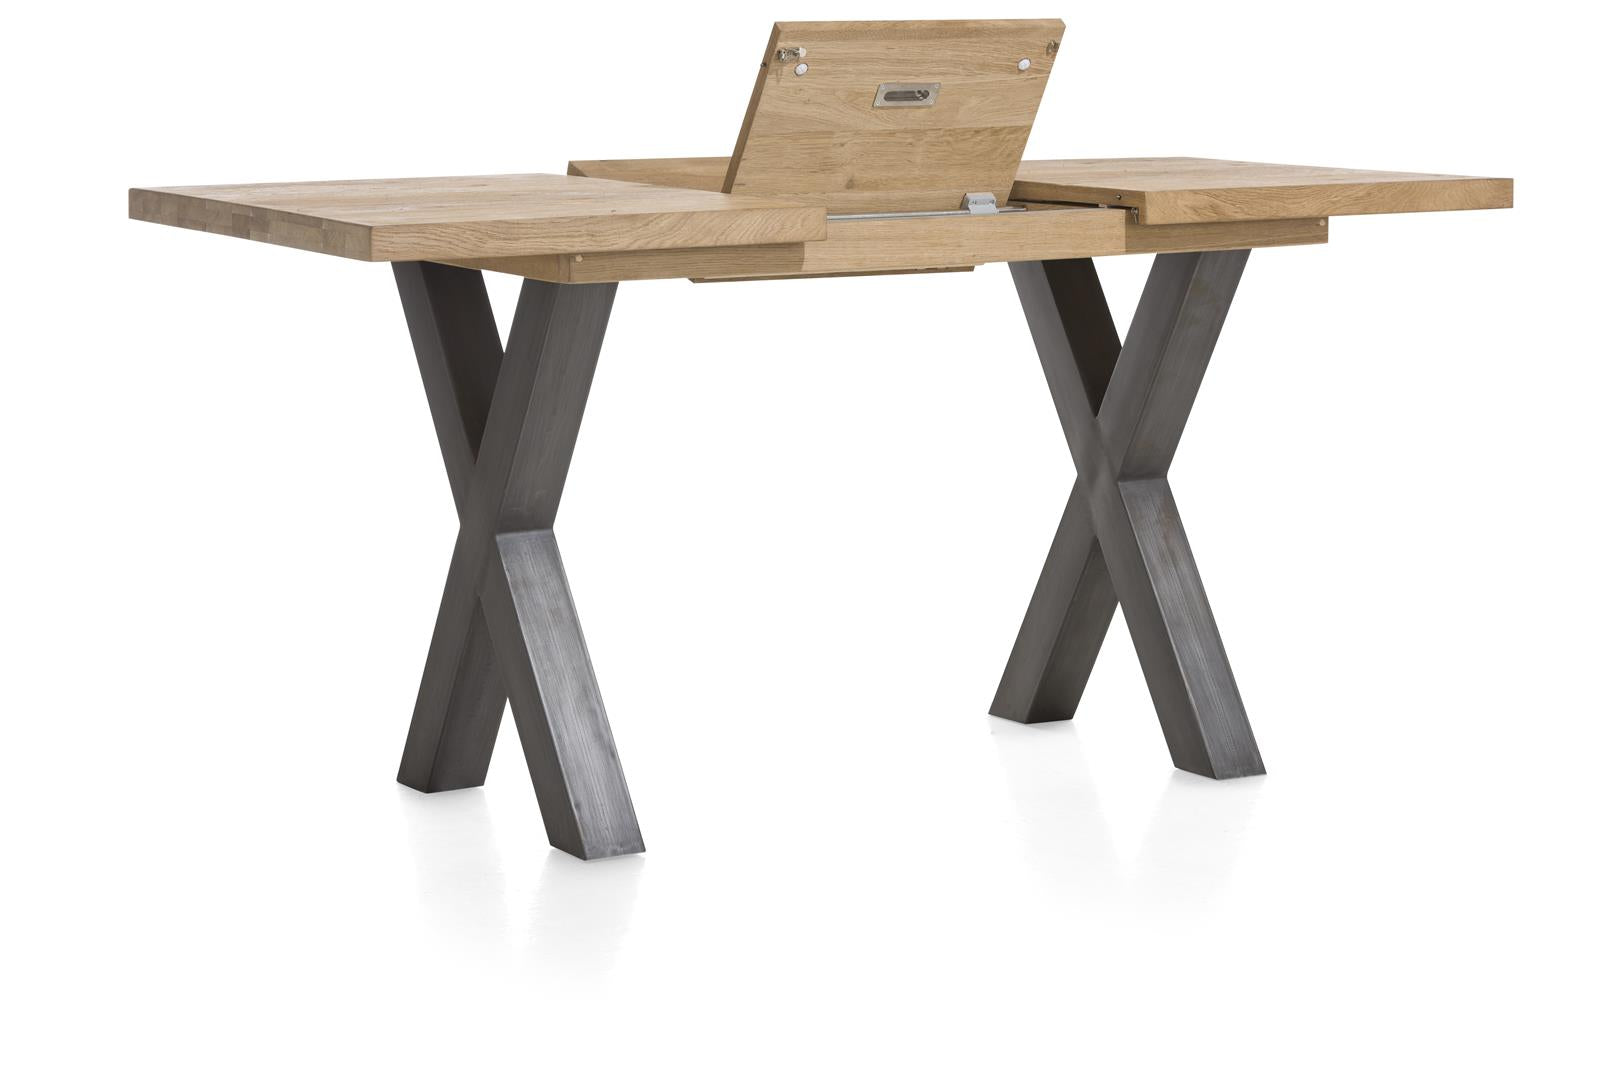 Habufa Metalox Bar Tables in Oak-bar Tables-Habufa-130 cms-U shape metal legs-Wavy edge-Against The Grain Furniture